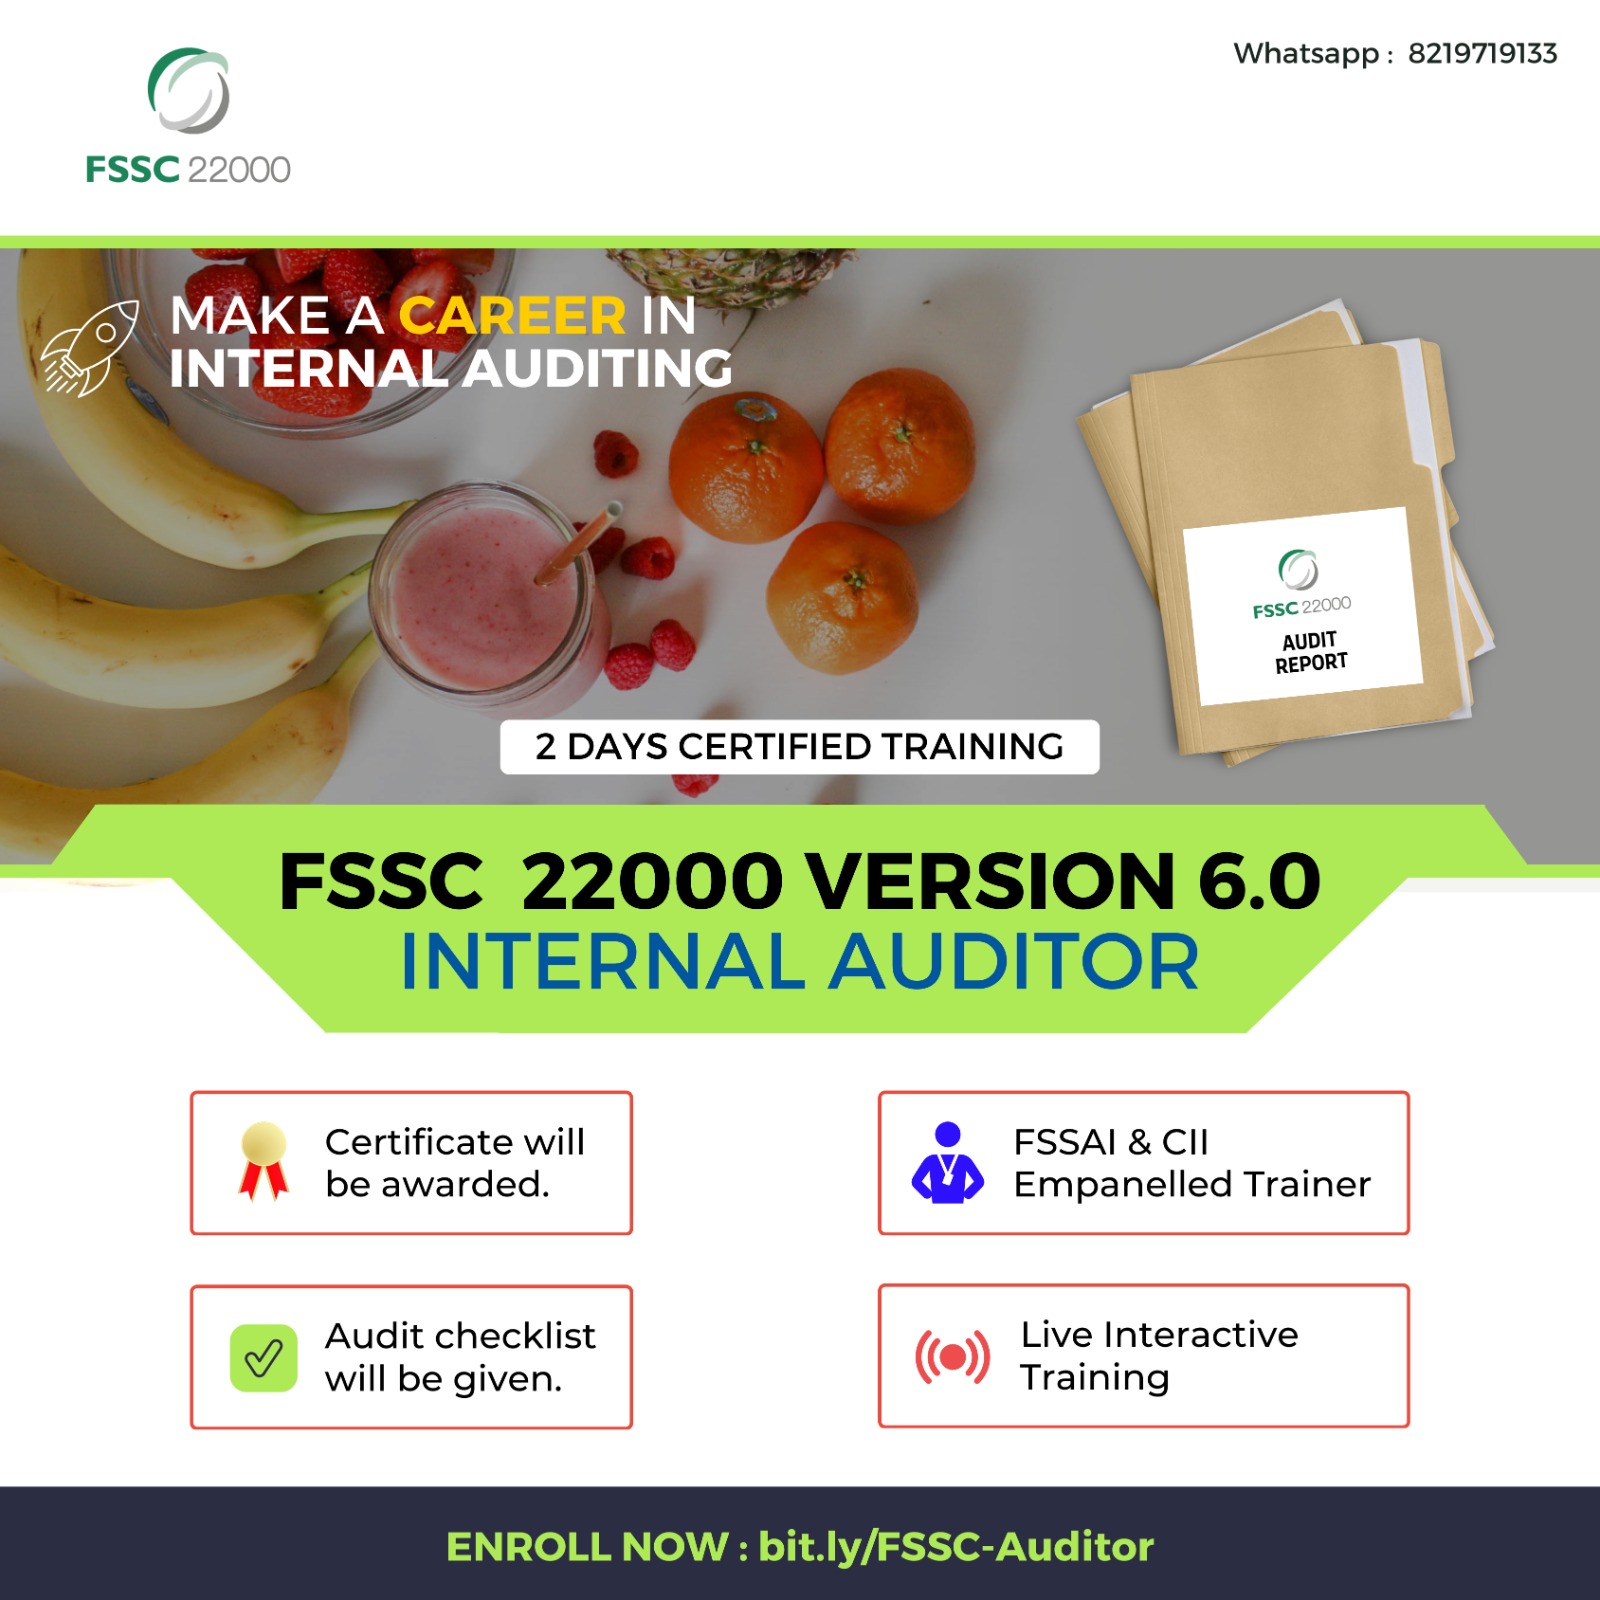 FSSC 22000 Version 6.0 Internal Audit Training - Online Training Program - Training Material, certificate will be provided | KATTUFOODTECH